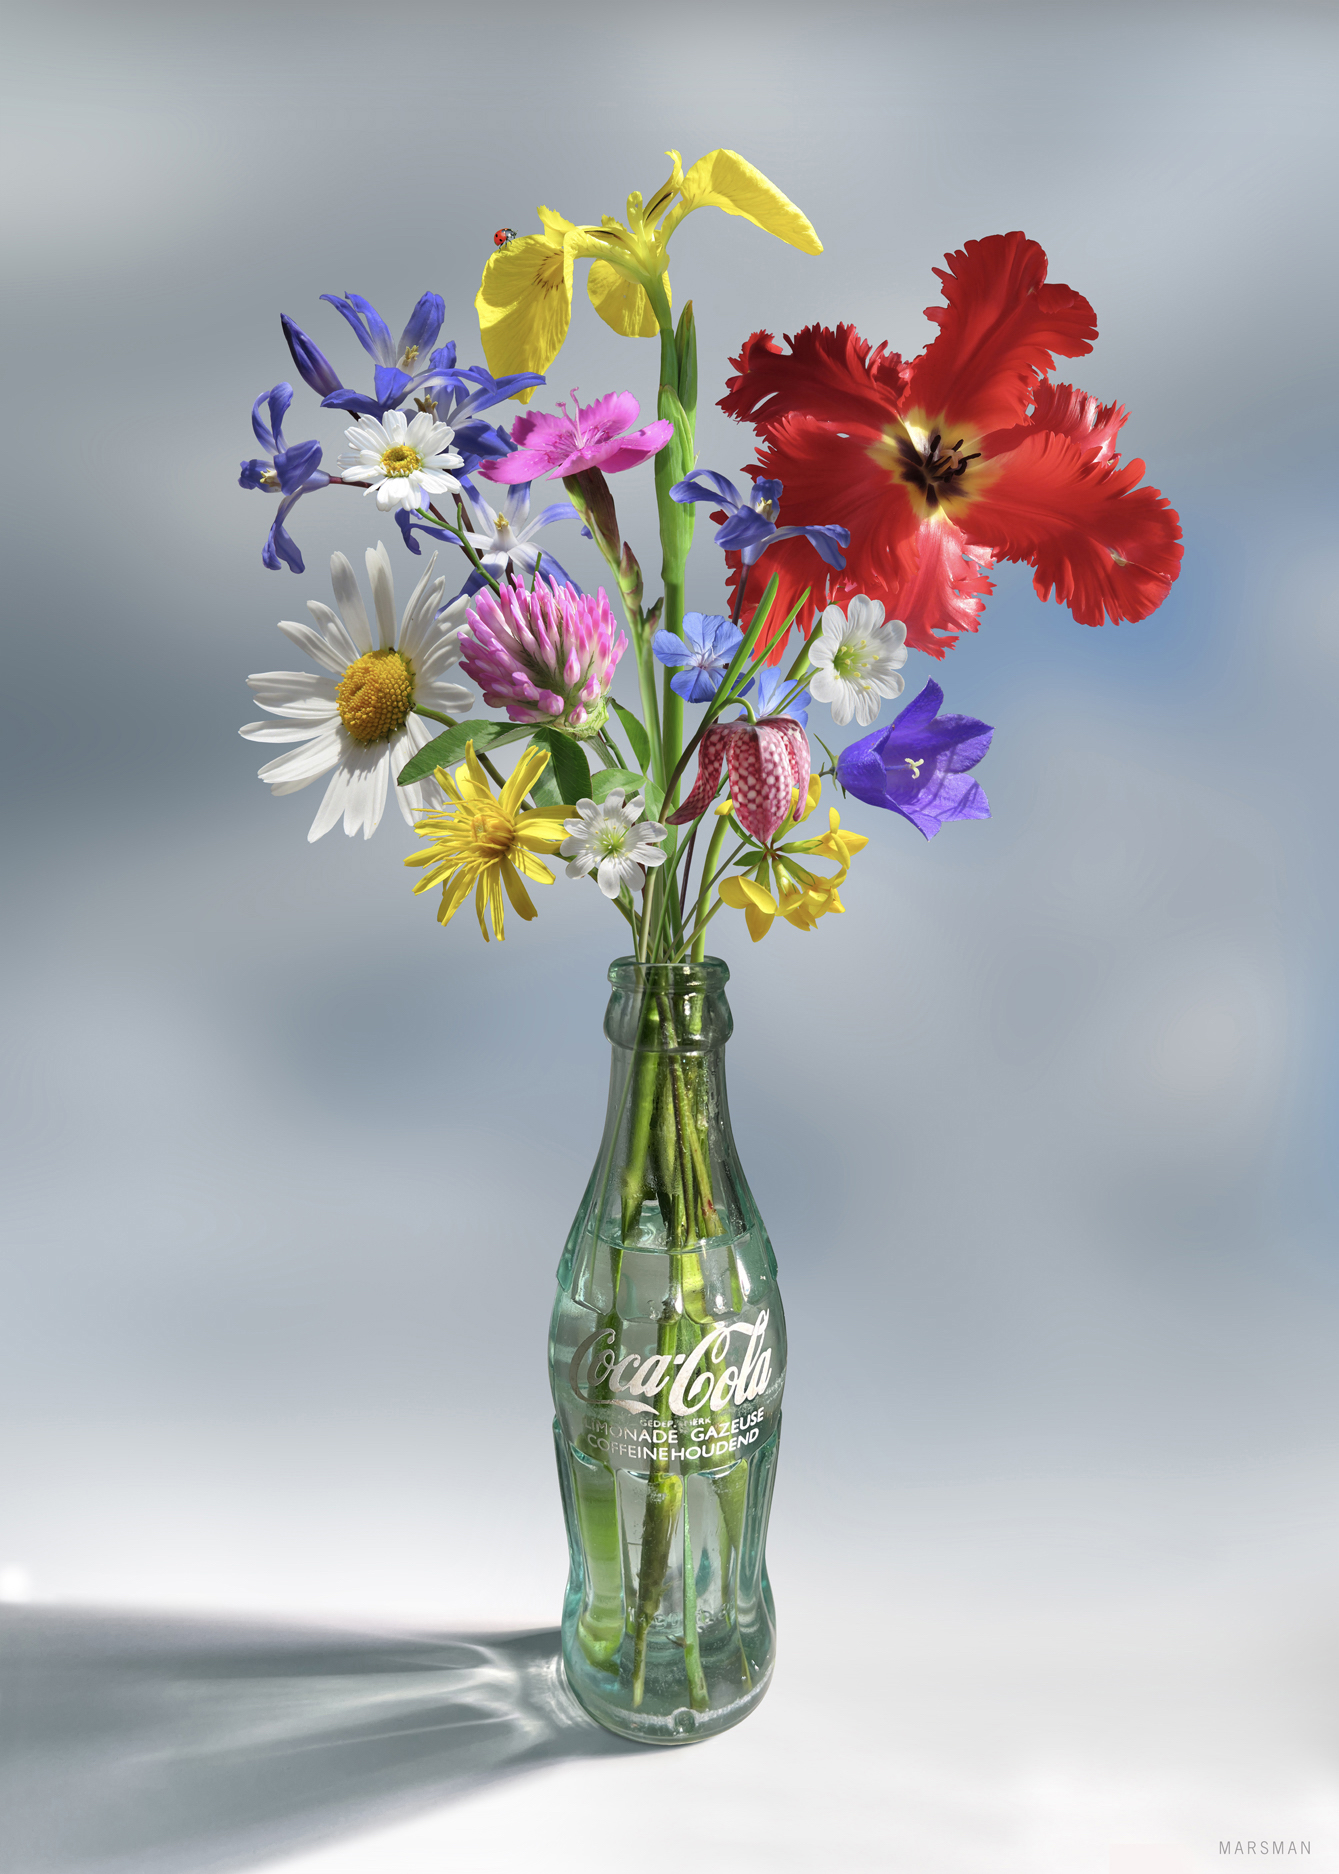 <b>COCA COLA VERSUS FLOWERS</b> - image 50 x 70 cm / frame 70 x 90 cm - Giclée - limited edition (100) - € 450,-  <a style="color: red; text-decoration: none" href="mailto:jpgpmarsman@onsbrabantnet.nl">BESTEL</a>